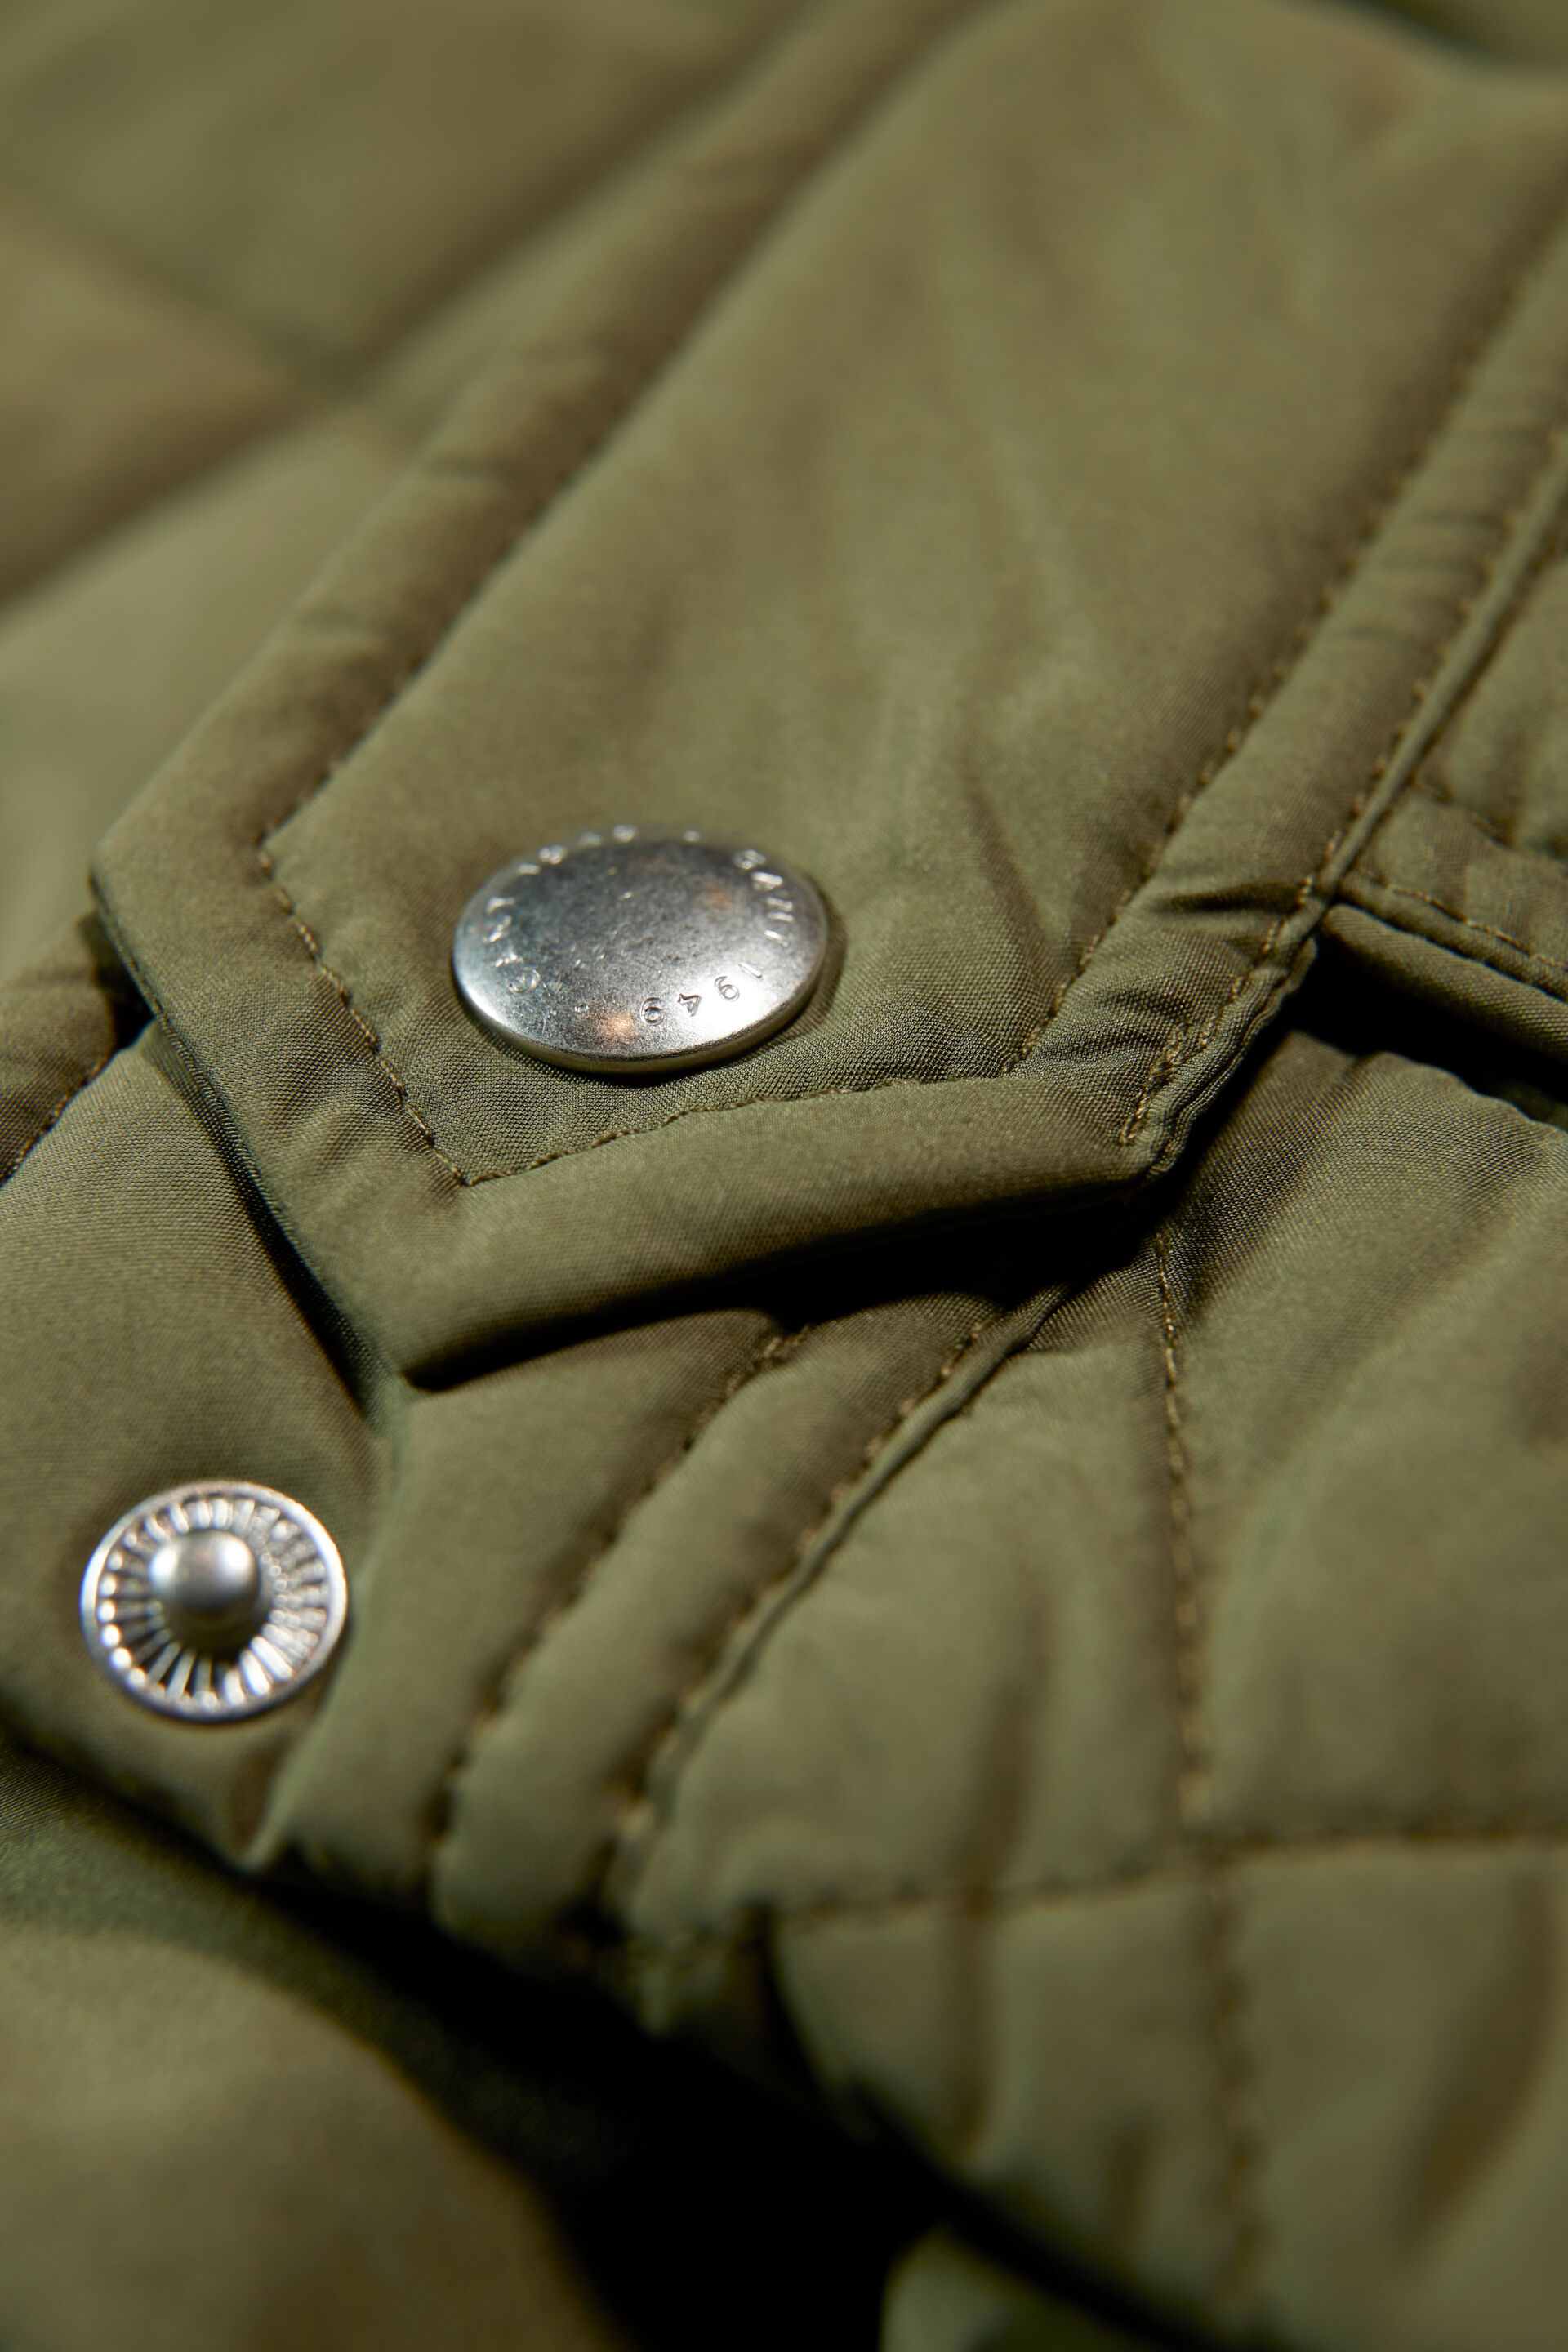 Gant  Casual jakke 90-300300